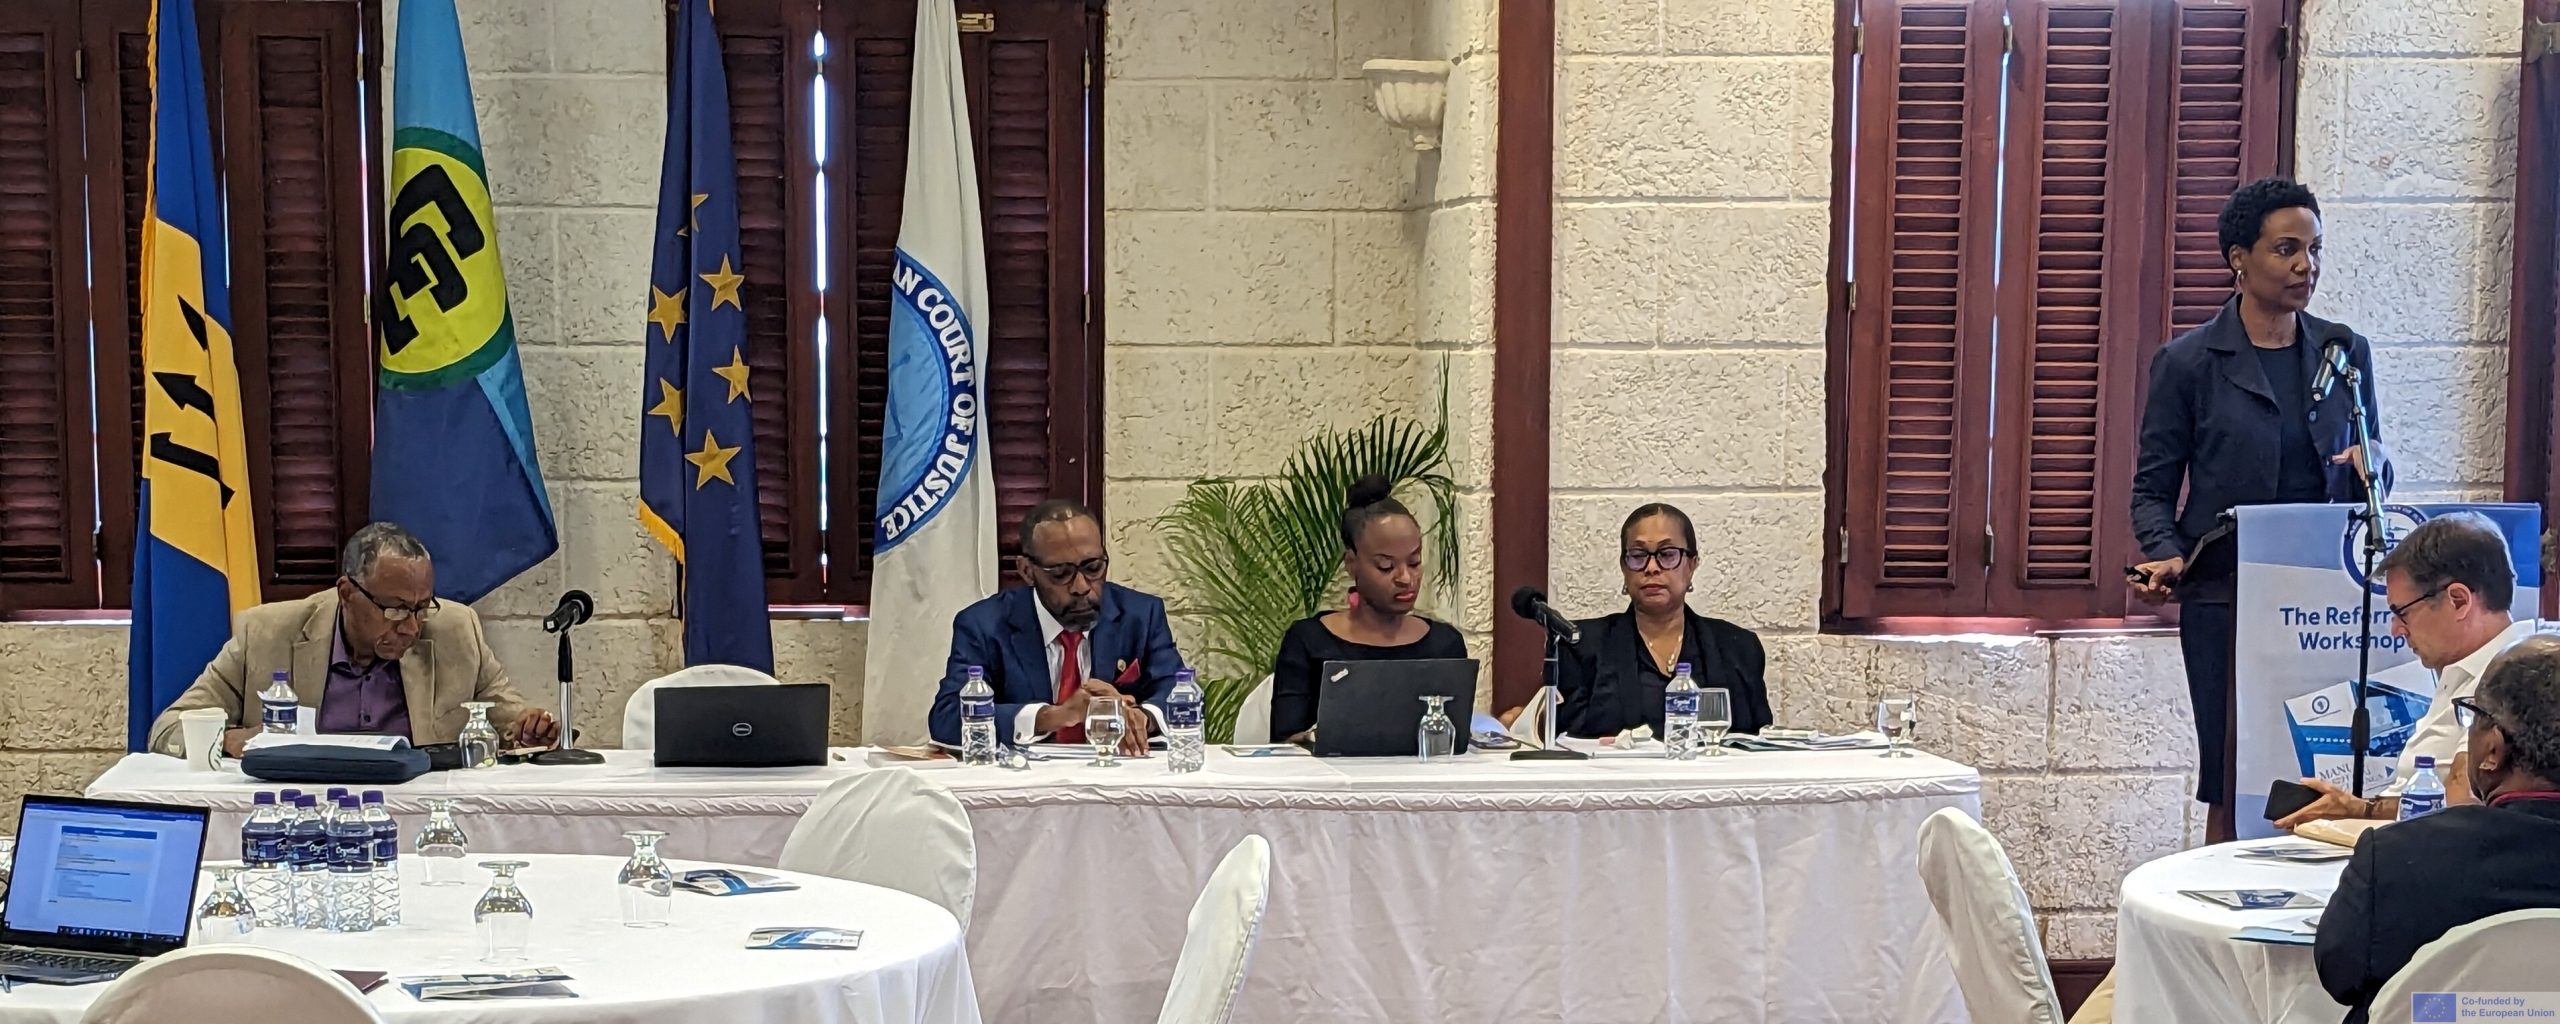 Judicial Officers in Barbados Participate in Sensitisation Sessions on the CCJ’s Original Jurisdiction